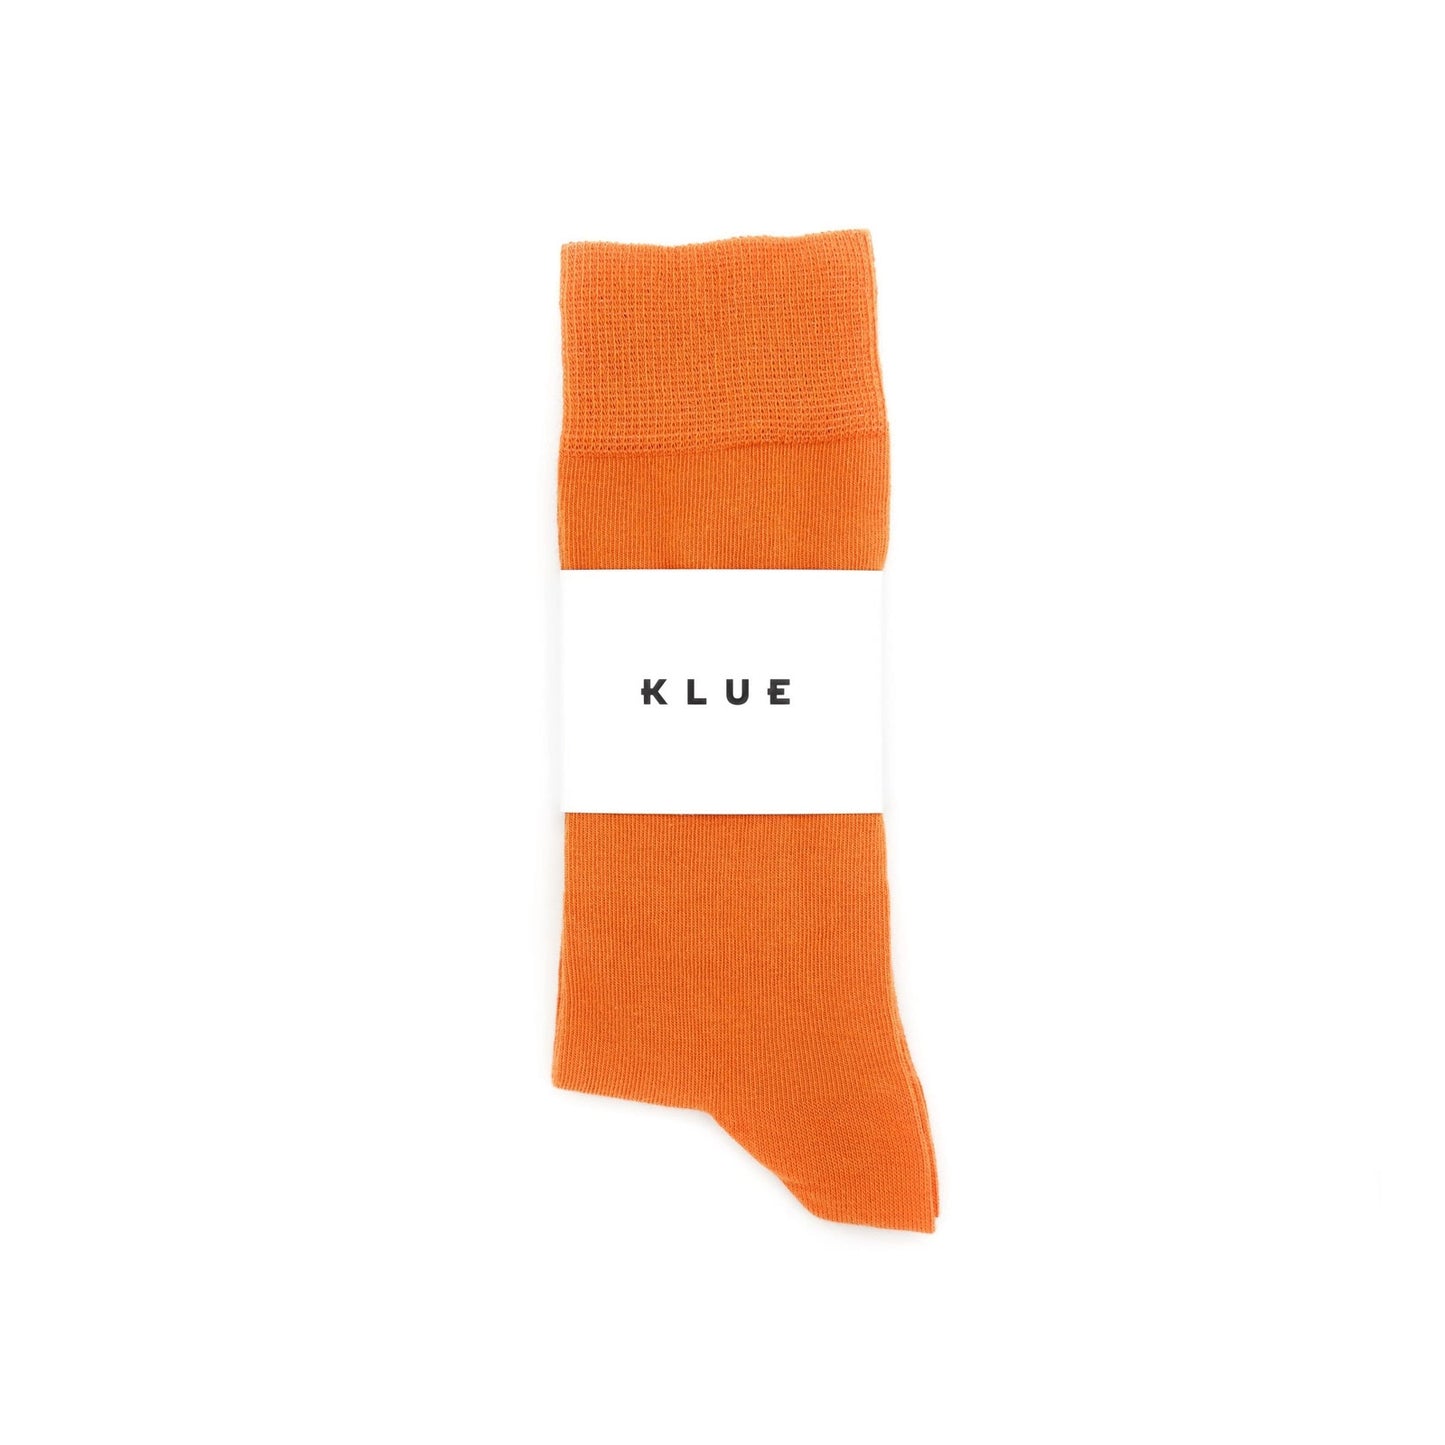 Klue Solid Socks in Orange